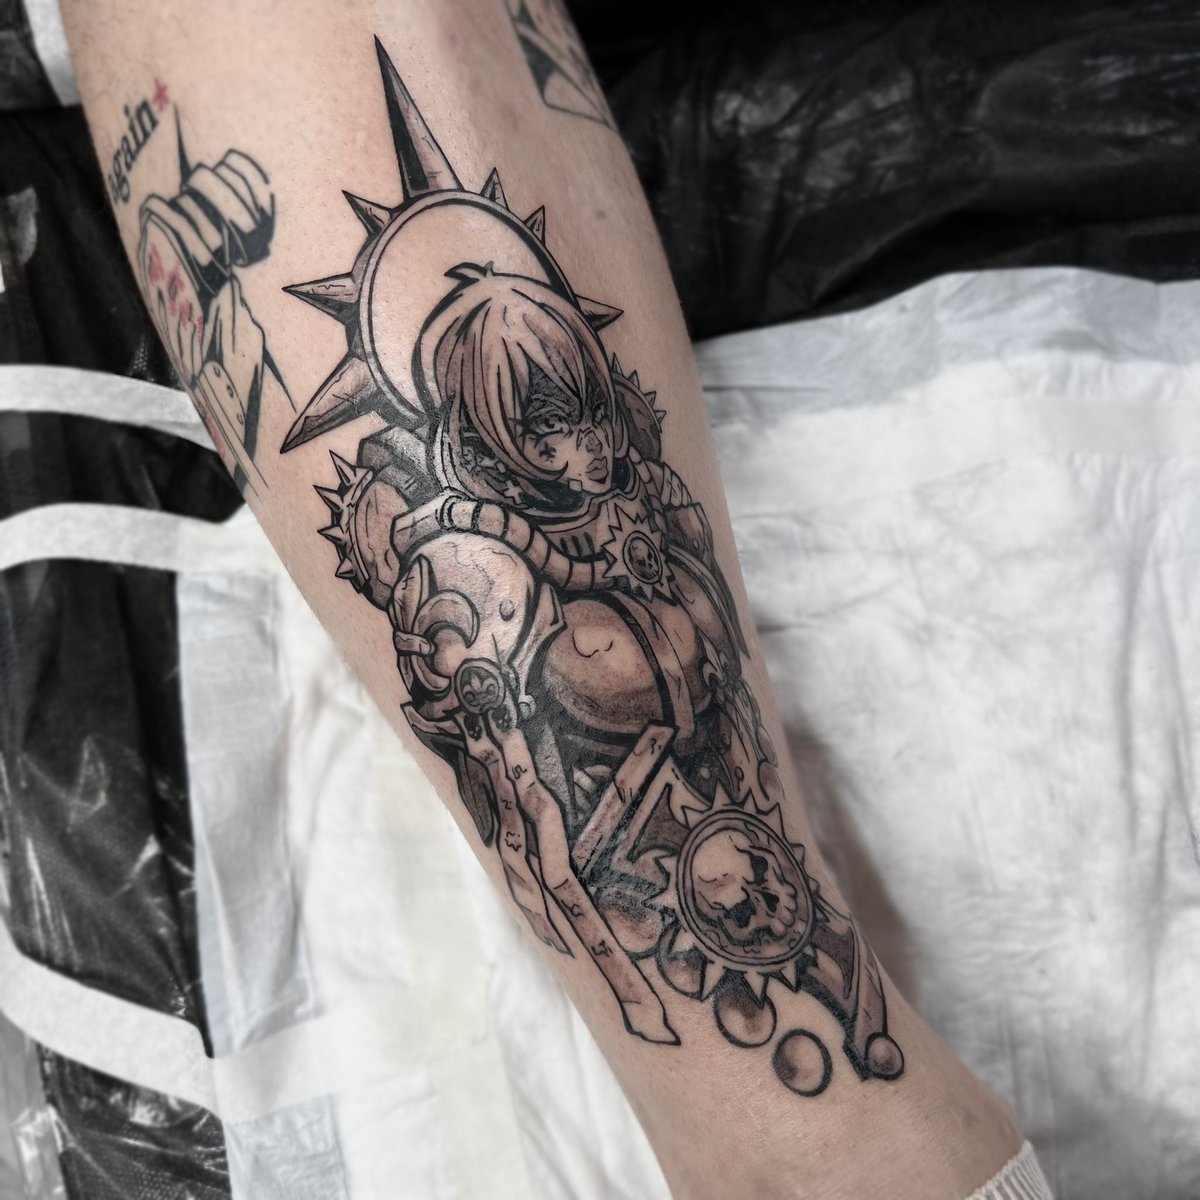 Adepta Sororitas | my tattoo project ❤️‍🔥

#warhammer40k #WarhammerCommunity #adeptasororitas #sistersofbattle #warhammer40000 @warhammer #WarhammerArt #art #tattoo @WH40kbestof #neotrad #neotraditionaltattoo #tattooidea #tattooartist #tattooart